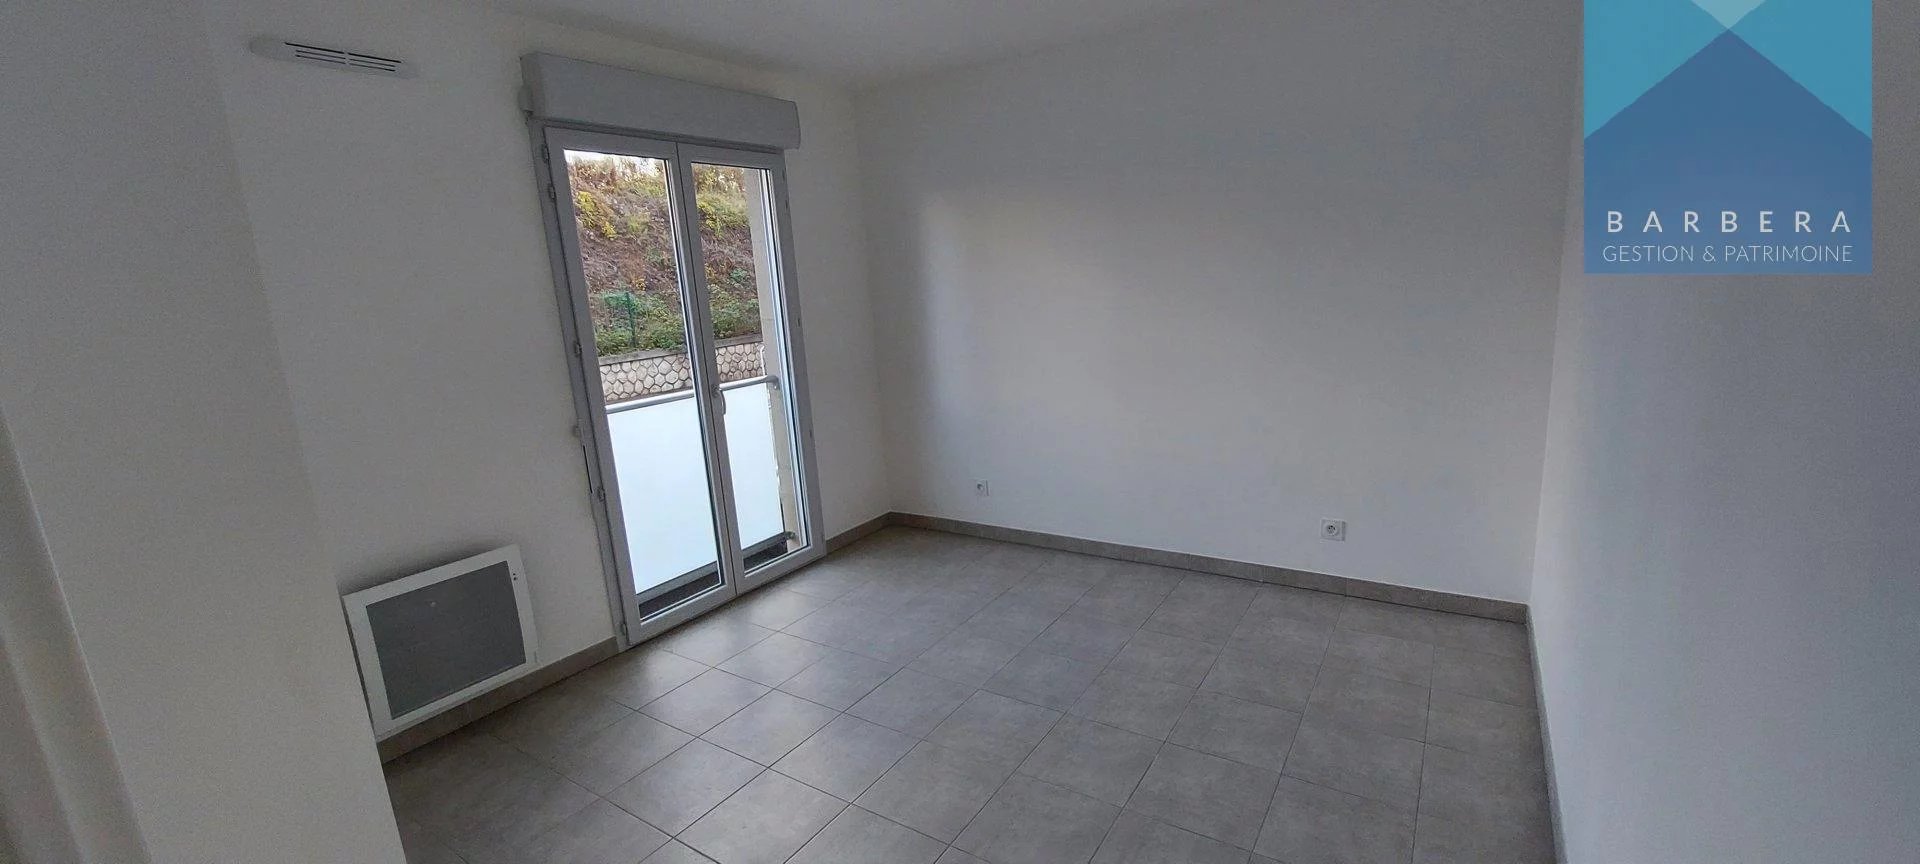 Vente appartement 40 m²